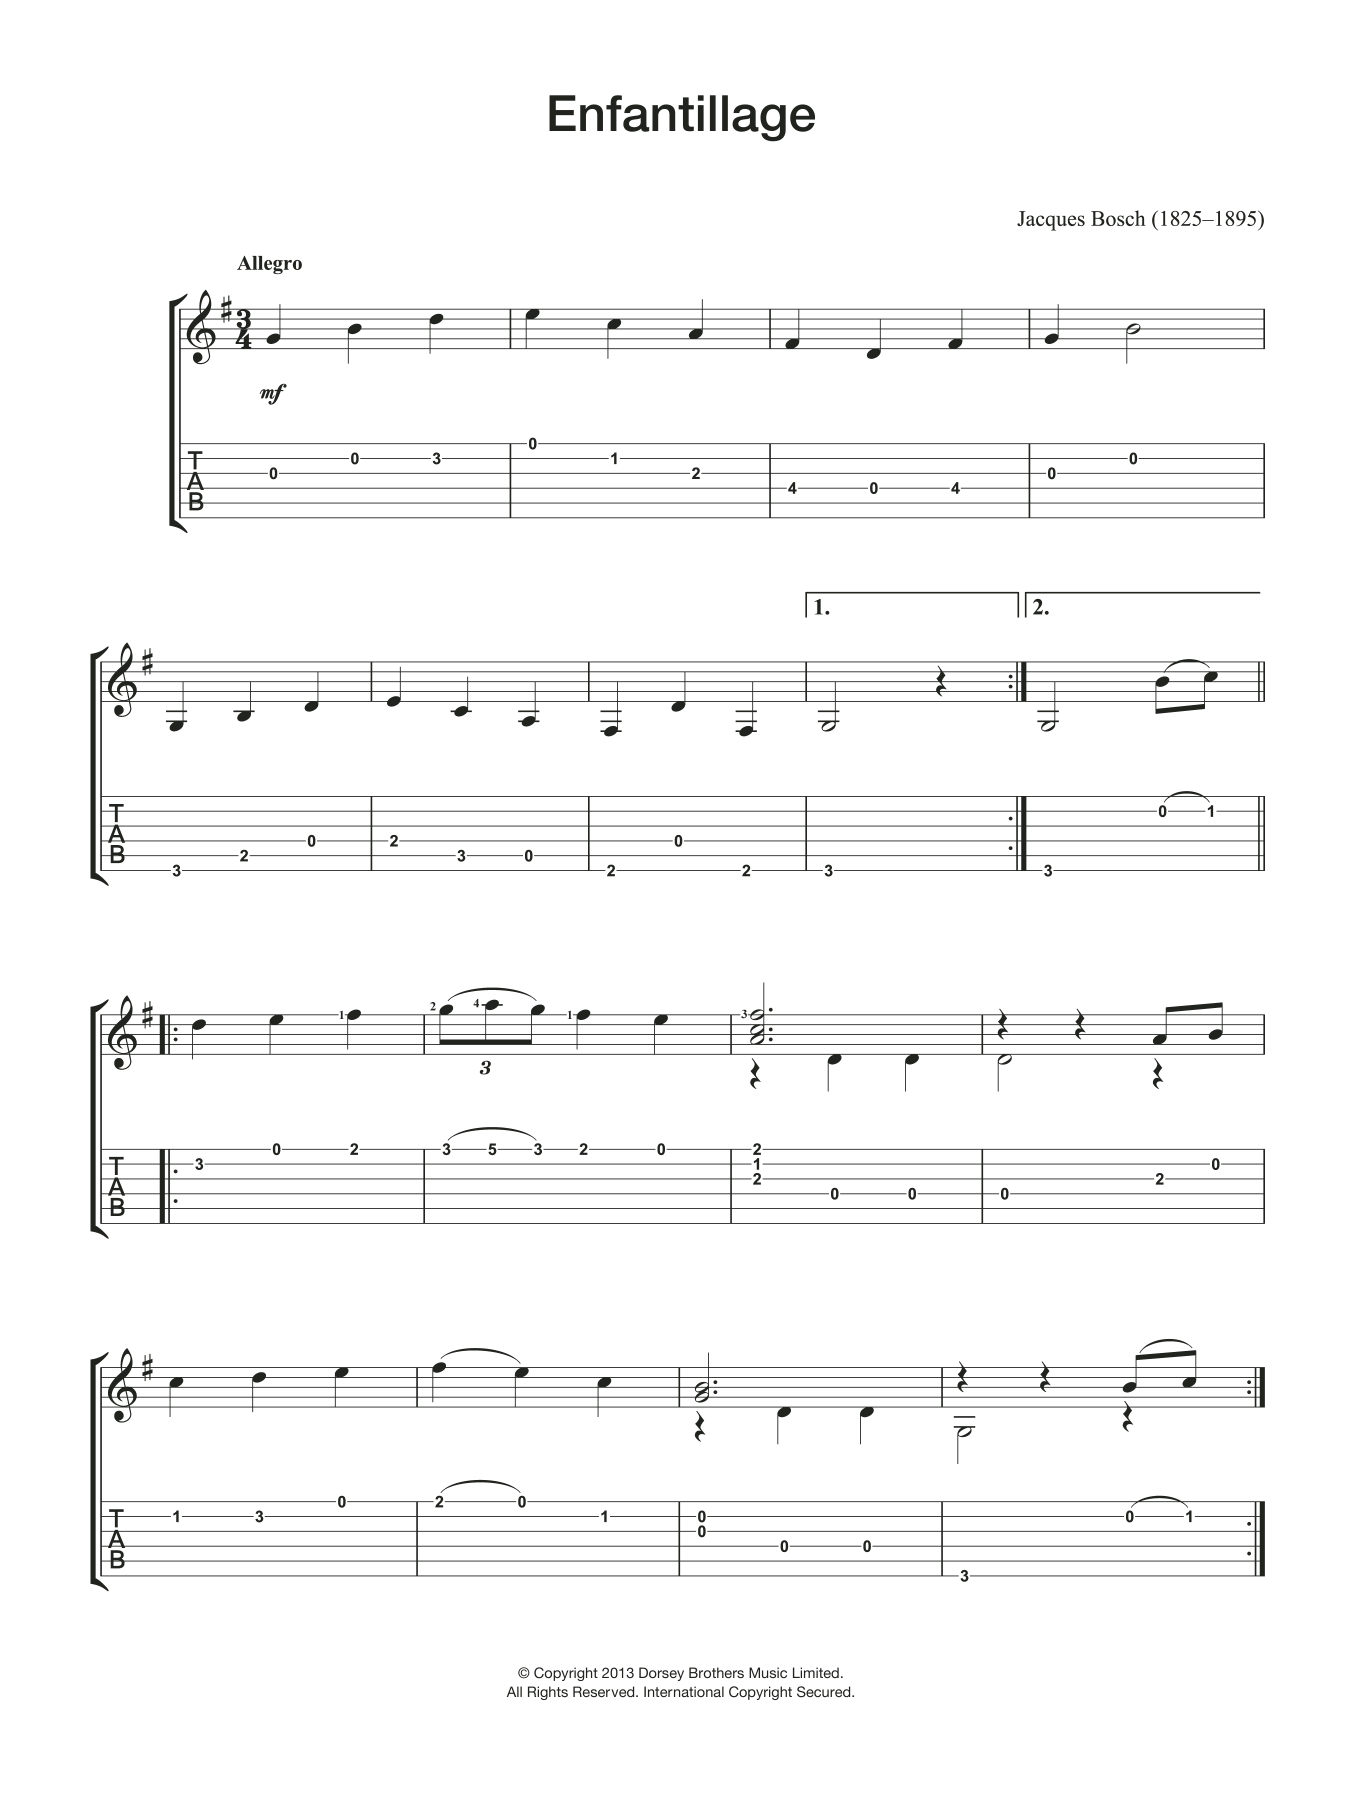 Jacques Bosch Enfantillage Sheet Music Notes & Chords for Guitar - Download or Print PDF